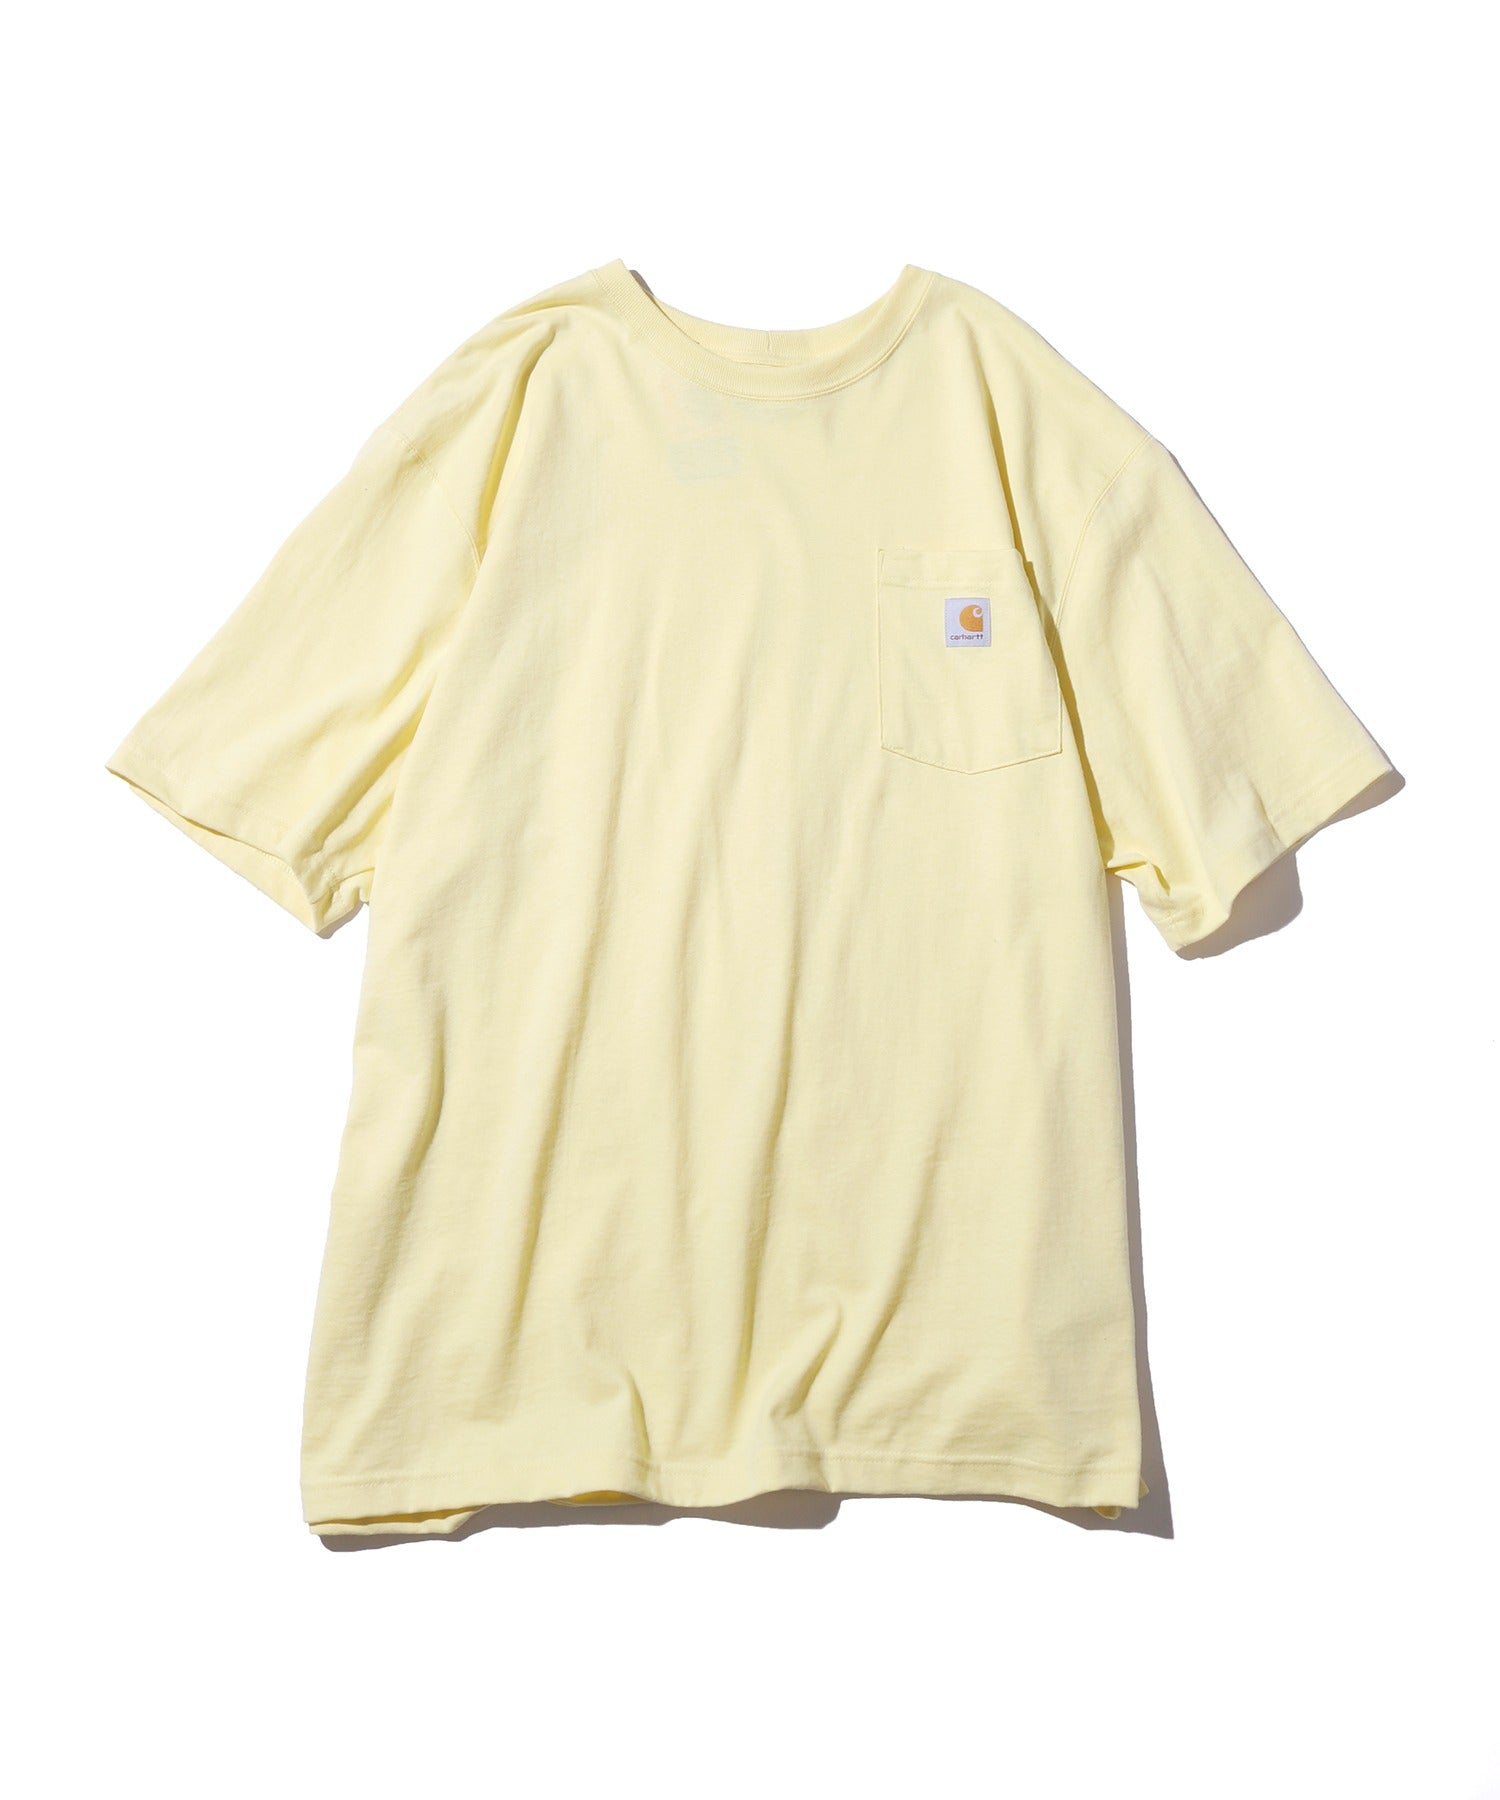 Carhartt/カーハート K87 Workwear Pocket T-Shirt 半袖Tシャツ